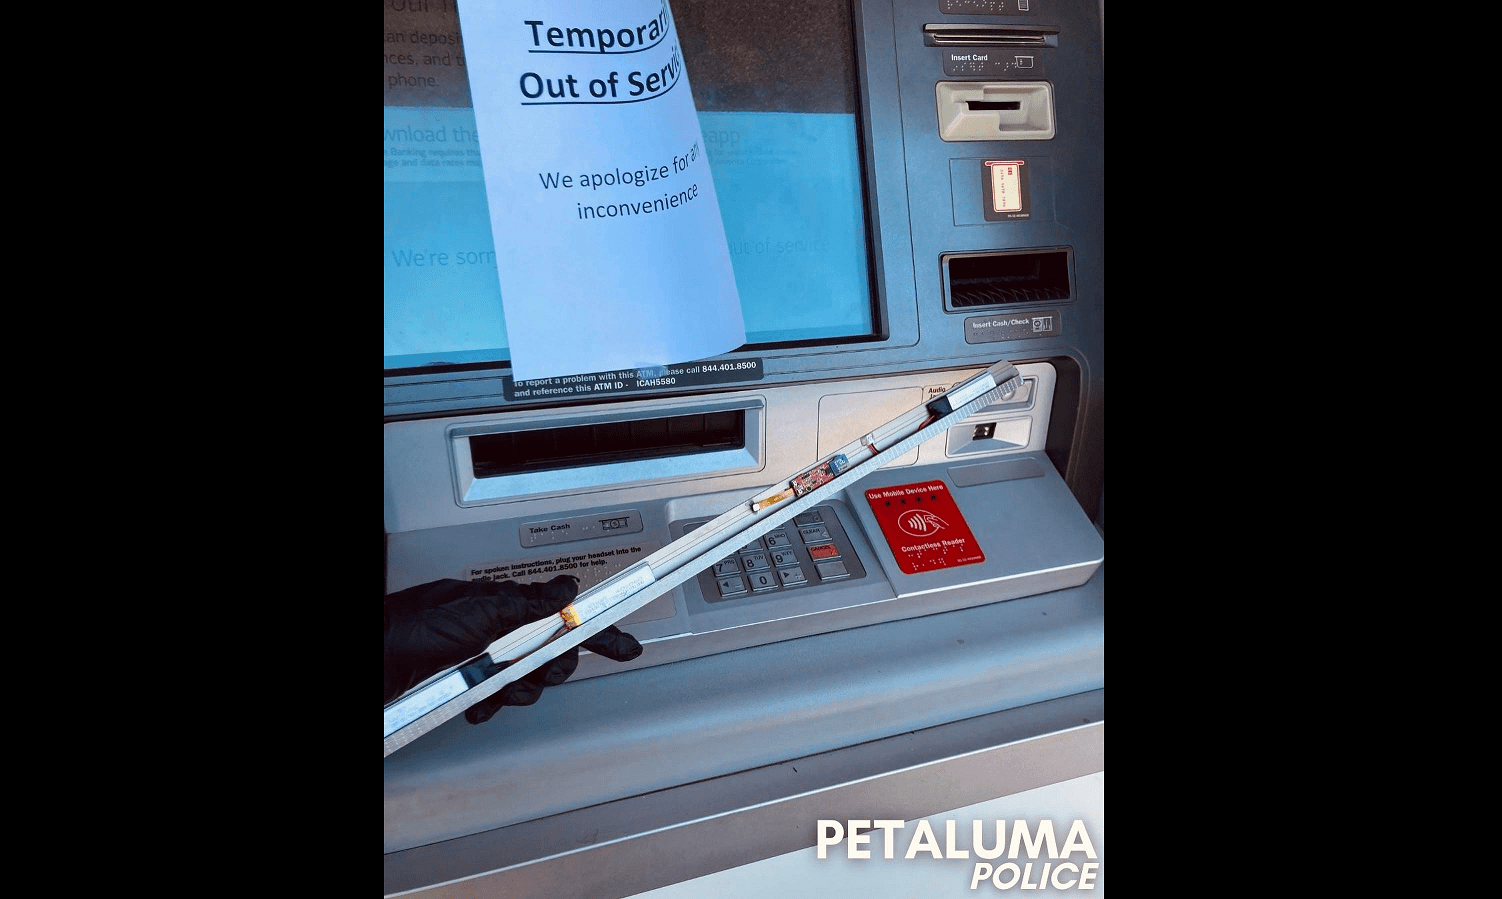 card-skimmer-found-in-atm-petaluma-police